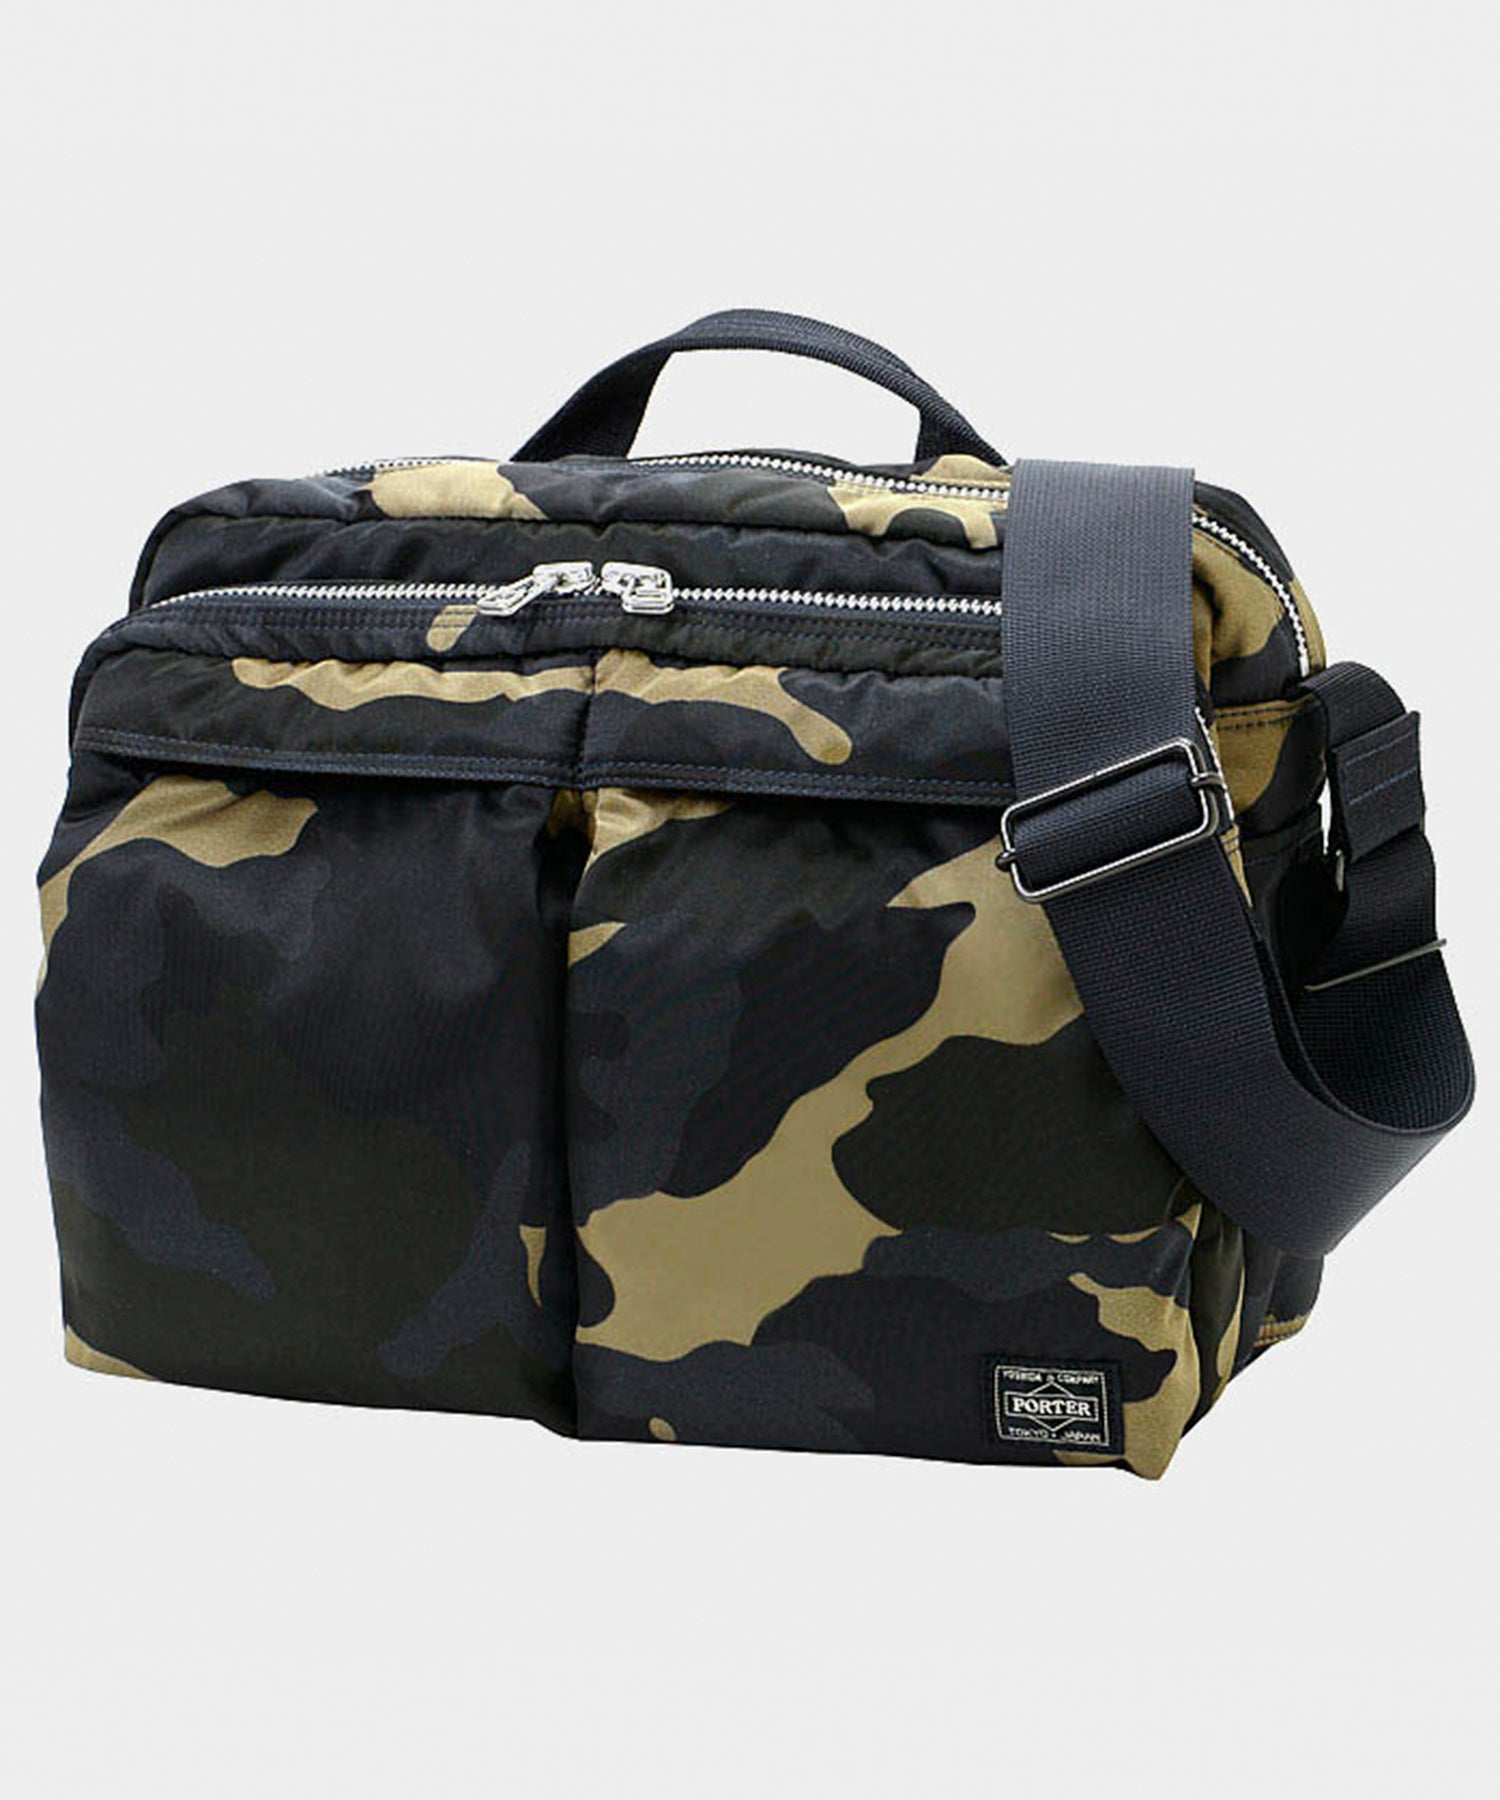 Porter Counter Shade 2way Shoulder Bag in Camouflage